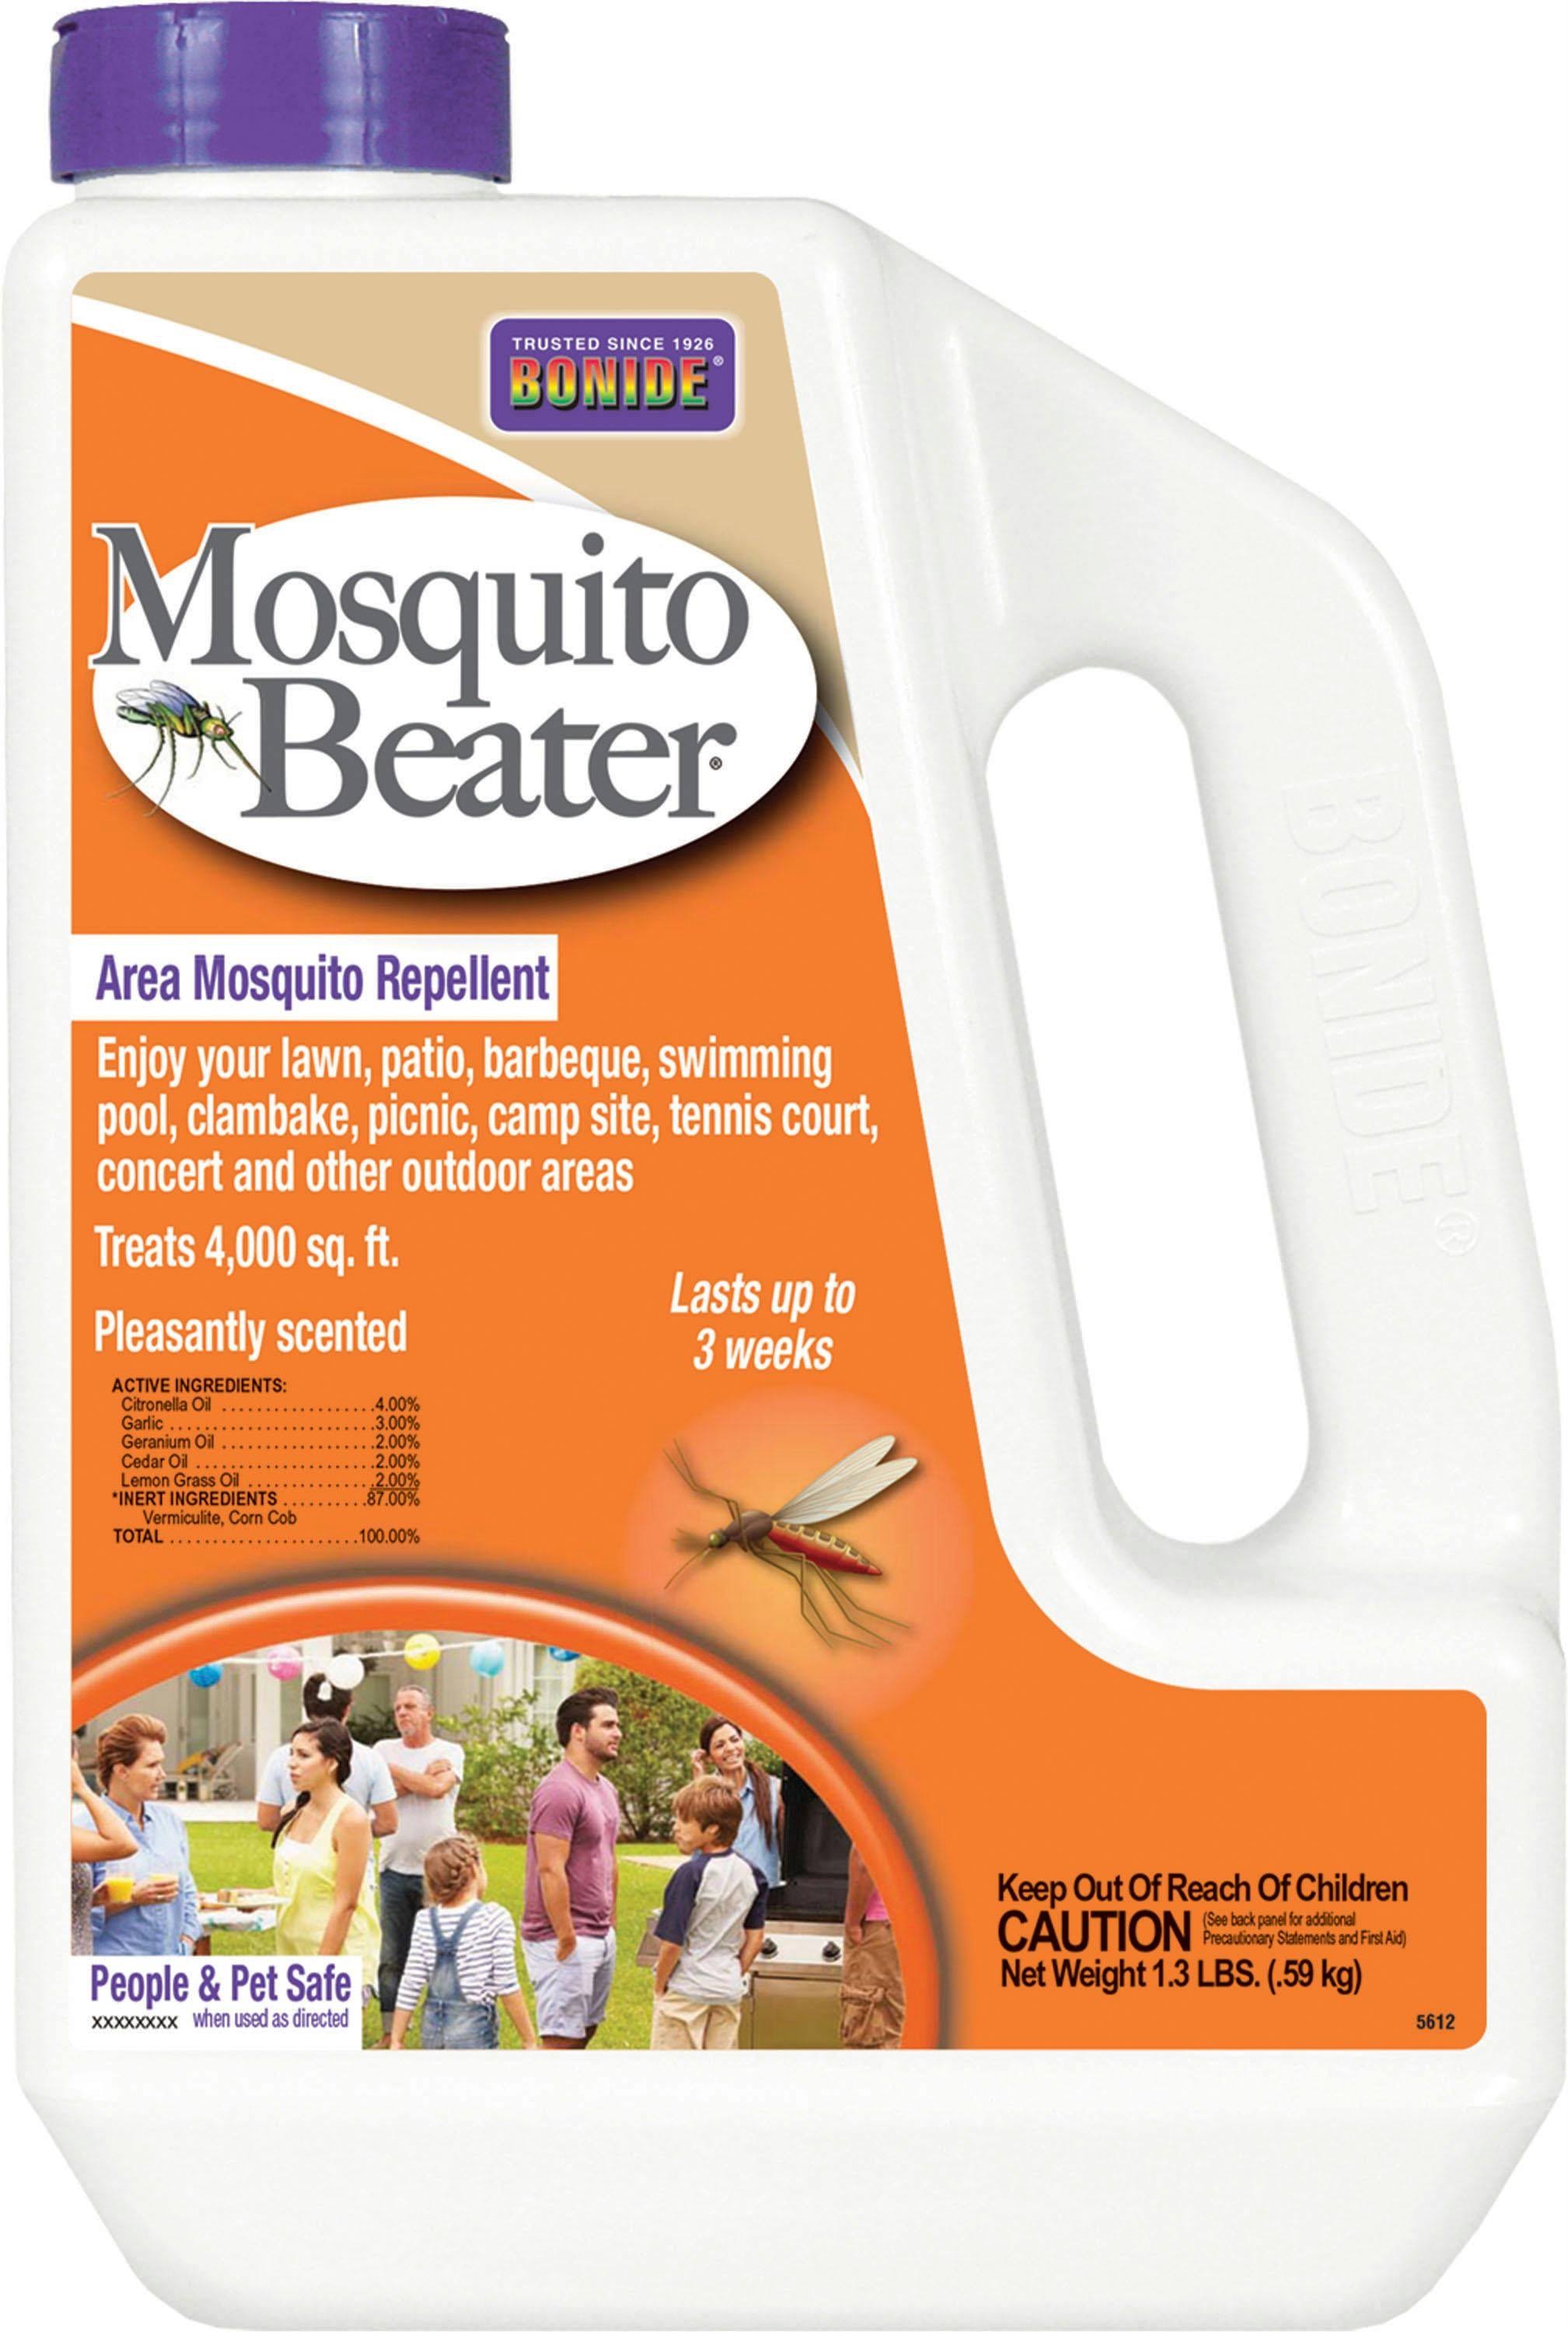 Bonide Mosquito Beater, 1.3 lbs